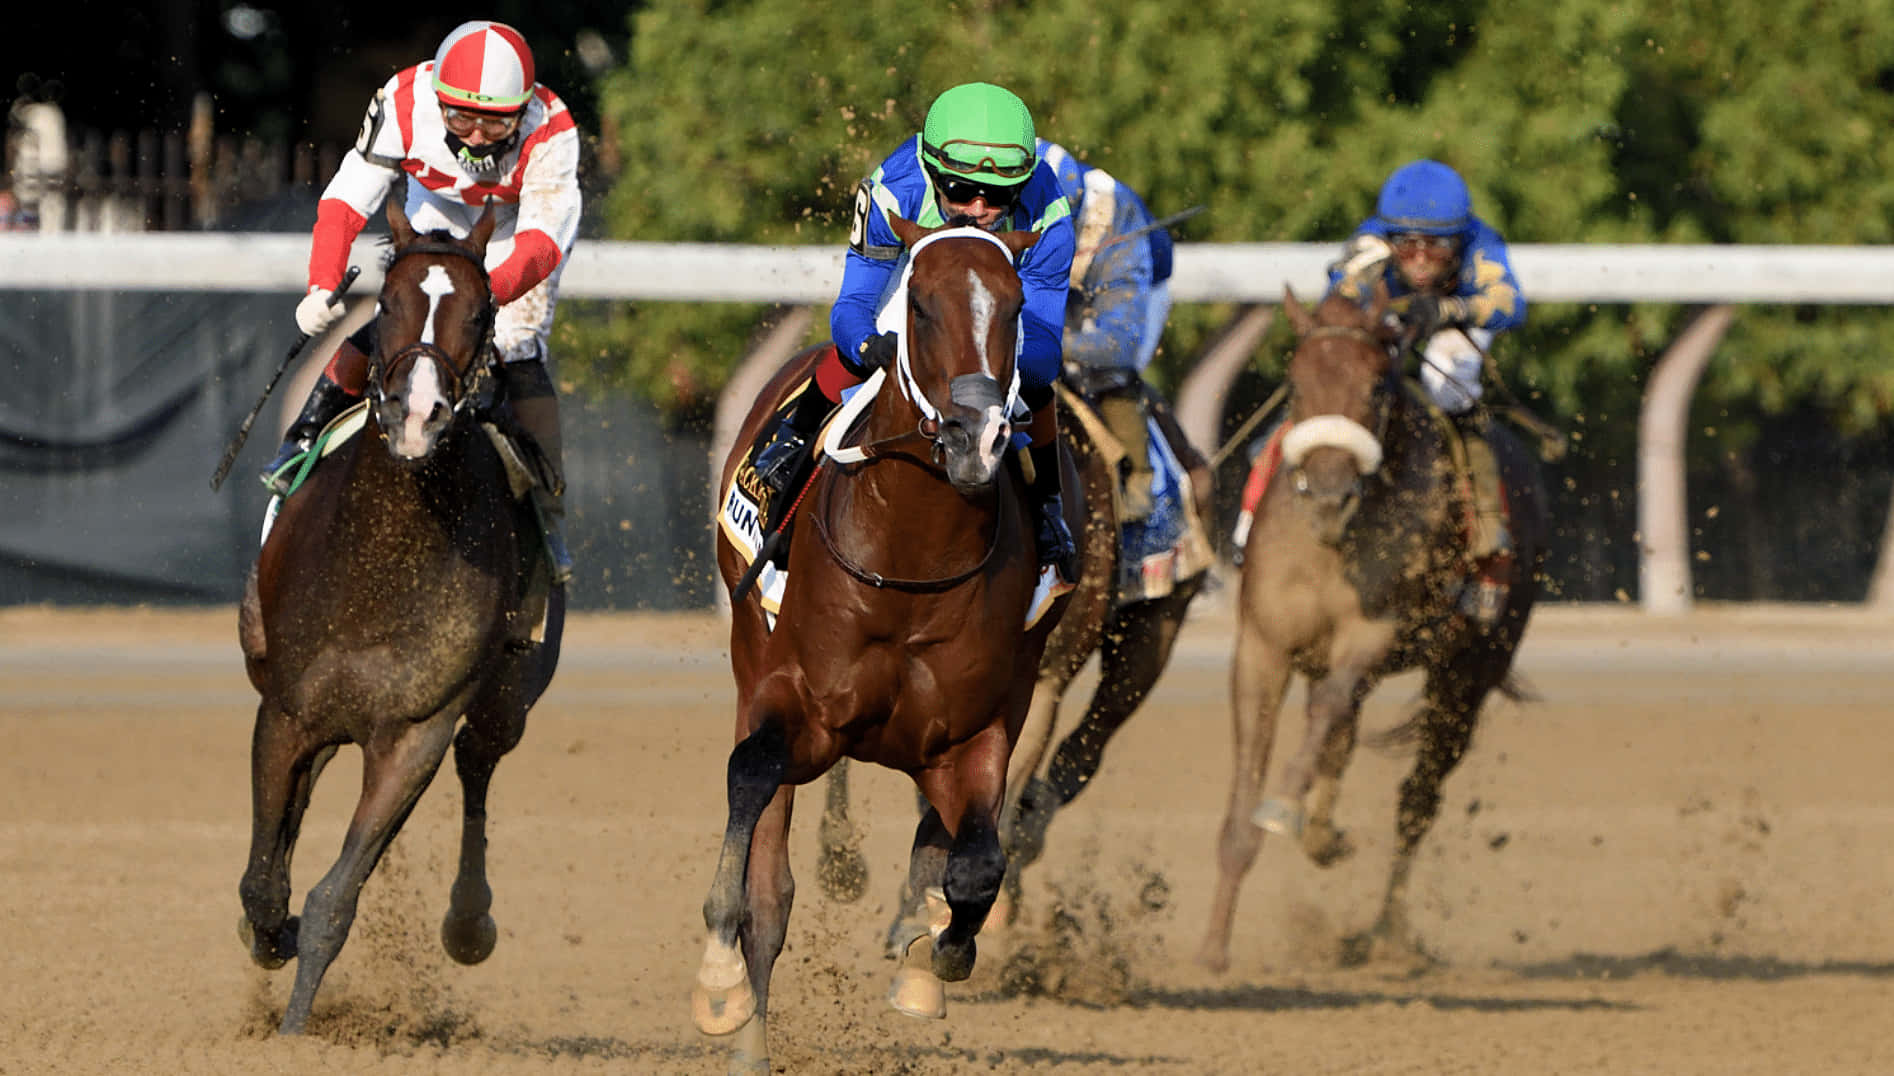 Three Jockeys Are Racing Horses On A Dirt Track